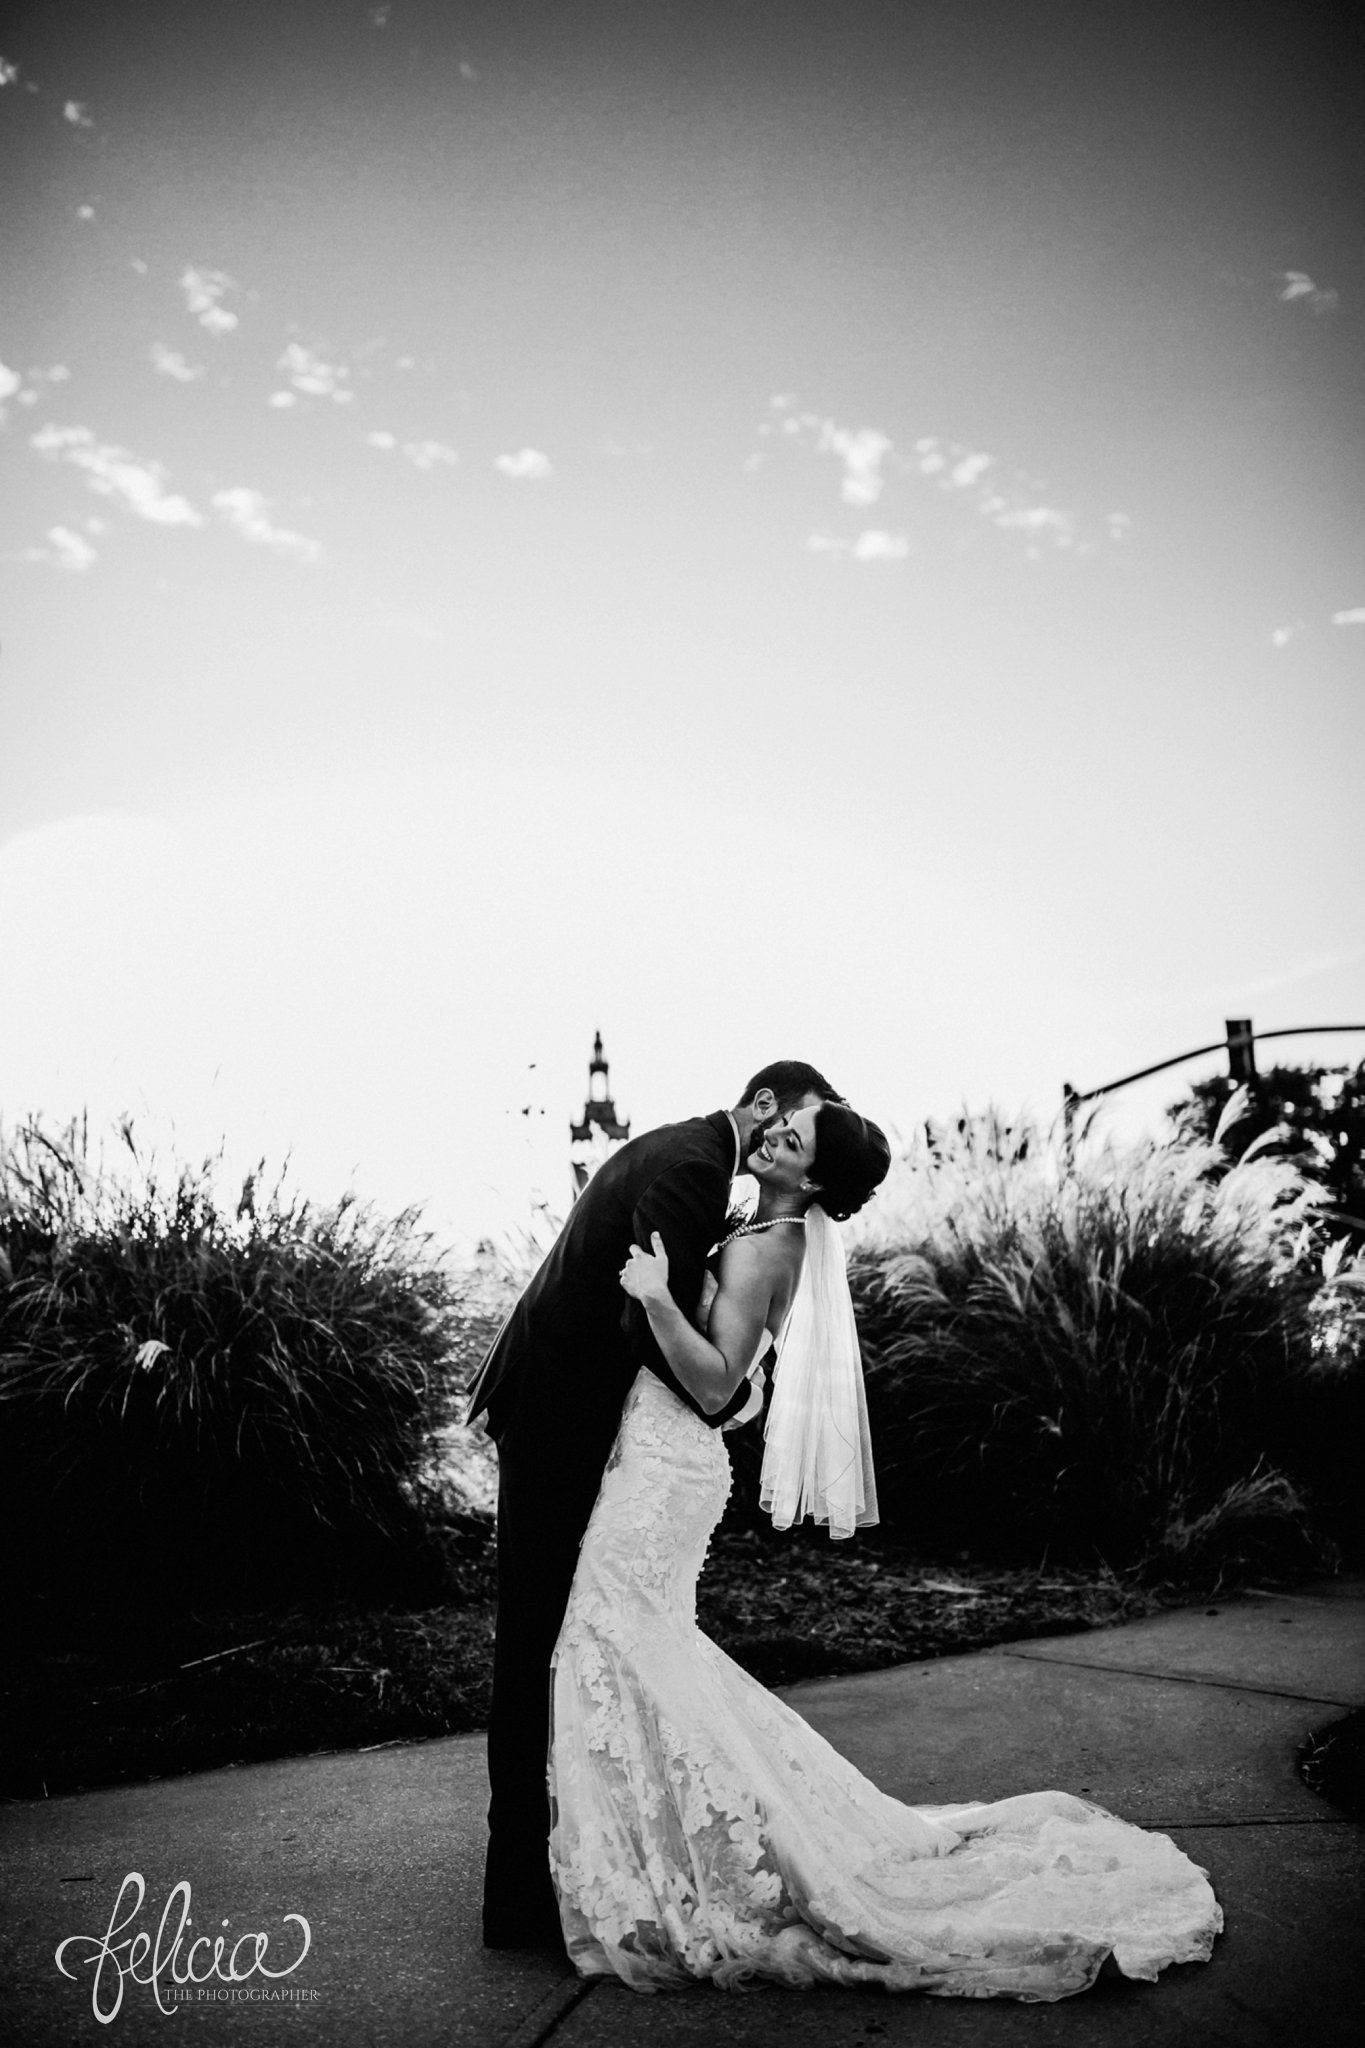 images by feliciathephotographer.com | wedding photographer | kansas city | portrait | black and white | bride and groom | plaza | emily hart | lace floral dress | short veil | wheat | 